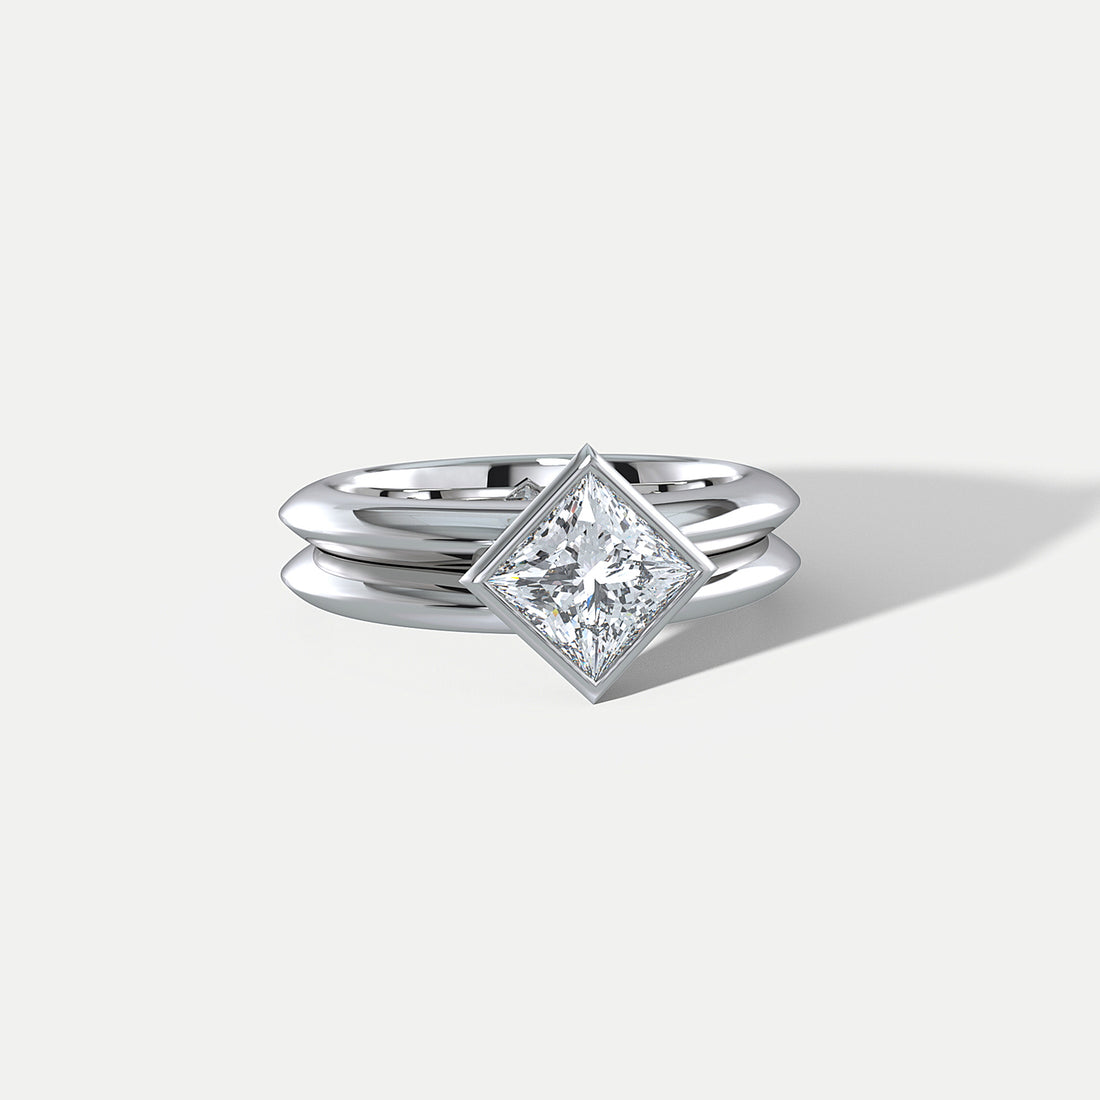  Square Diamond Bond Platinum Ring by Hannah Martin | The Cut London